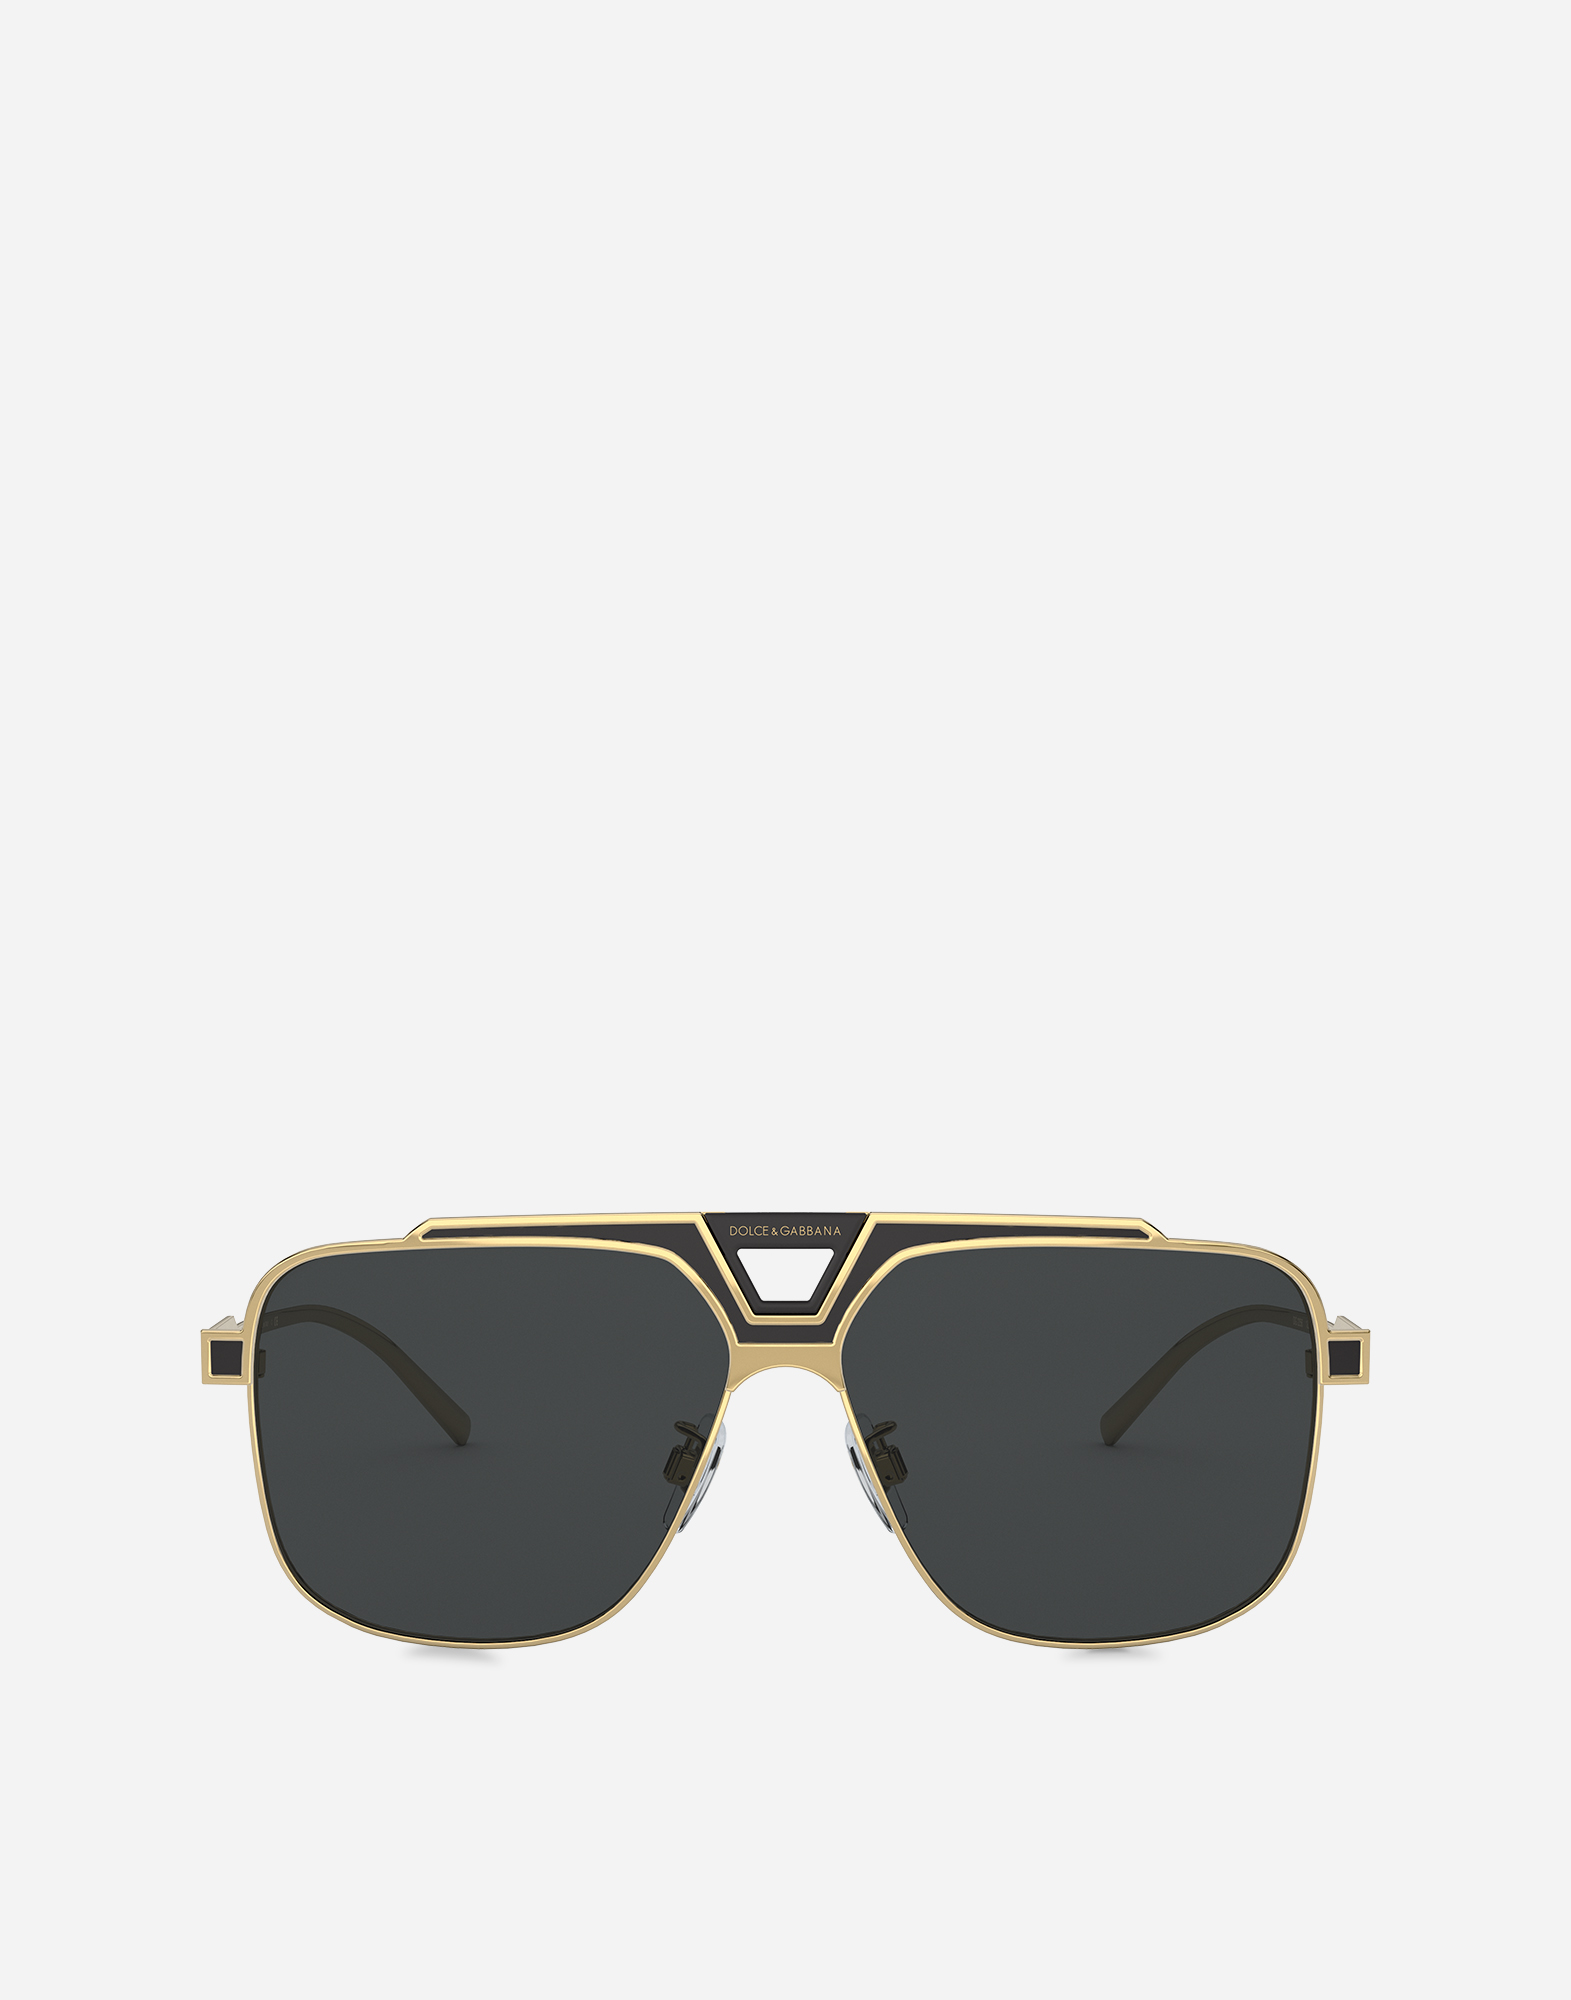 dolce & gabbana sunglasses men's